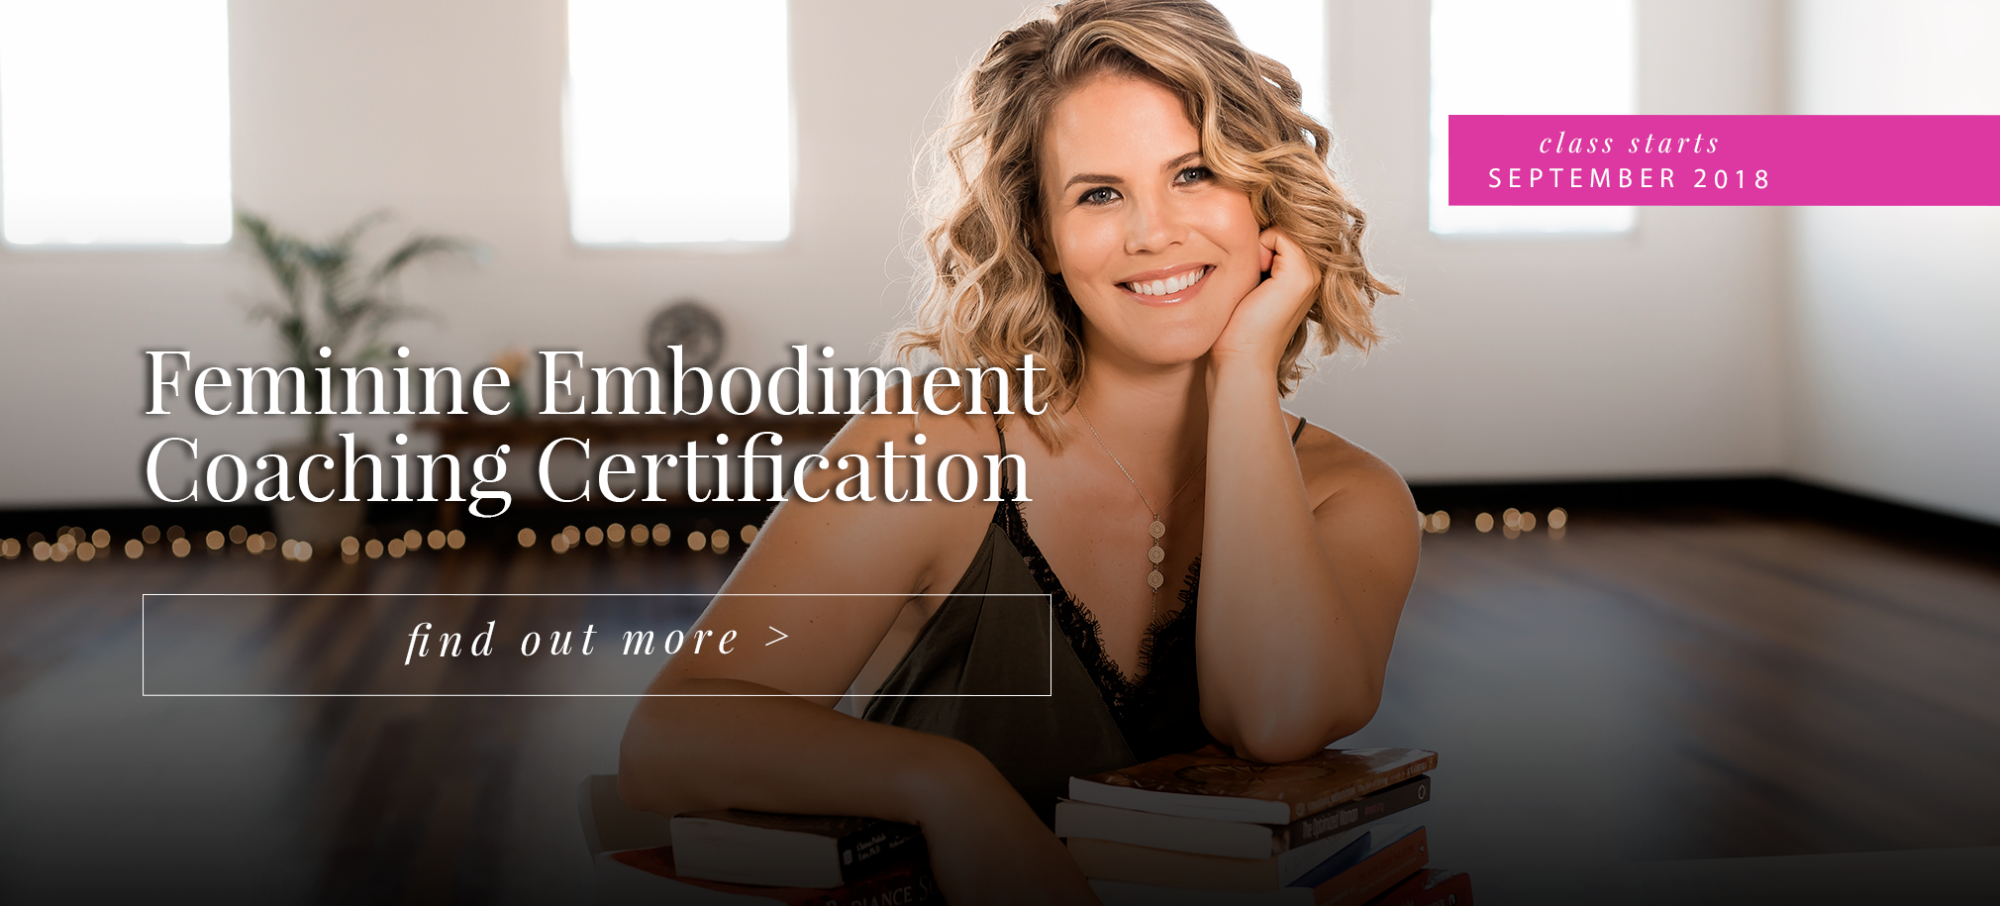 Sept 2018 Coaching Certification Enrollment Opens Jenna Ward Feminine